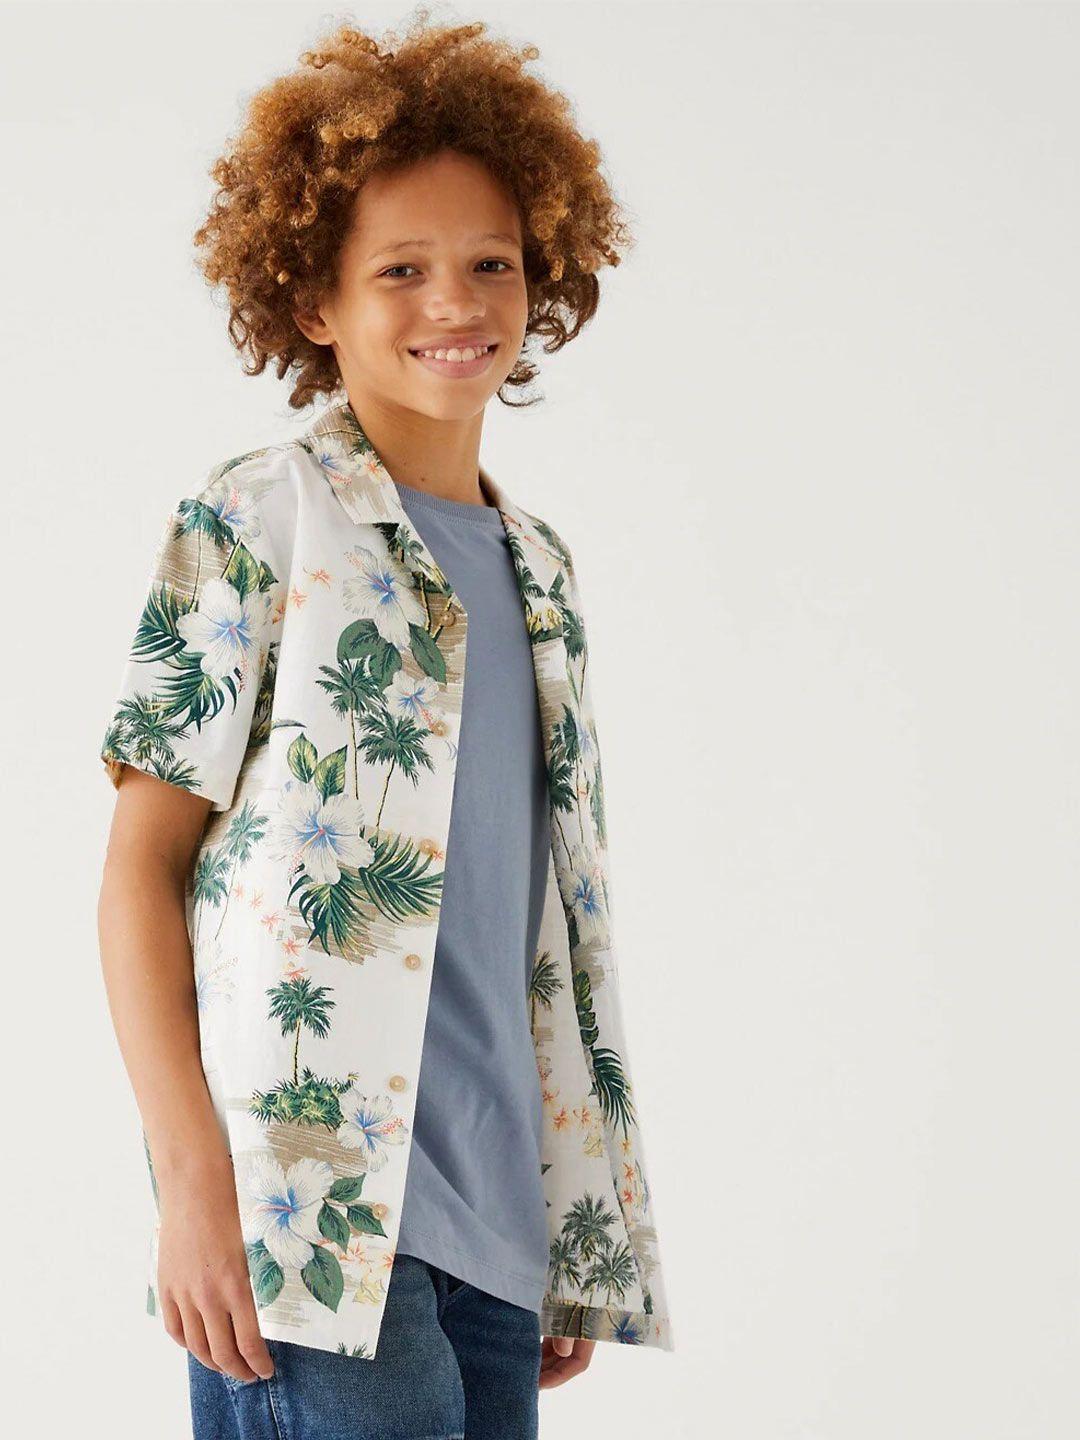 marks & spencer boys tropical printed pure cotton shirt